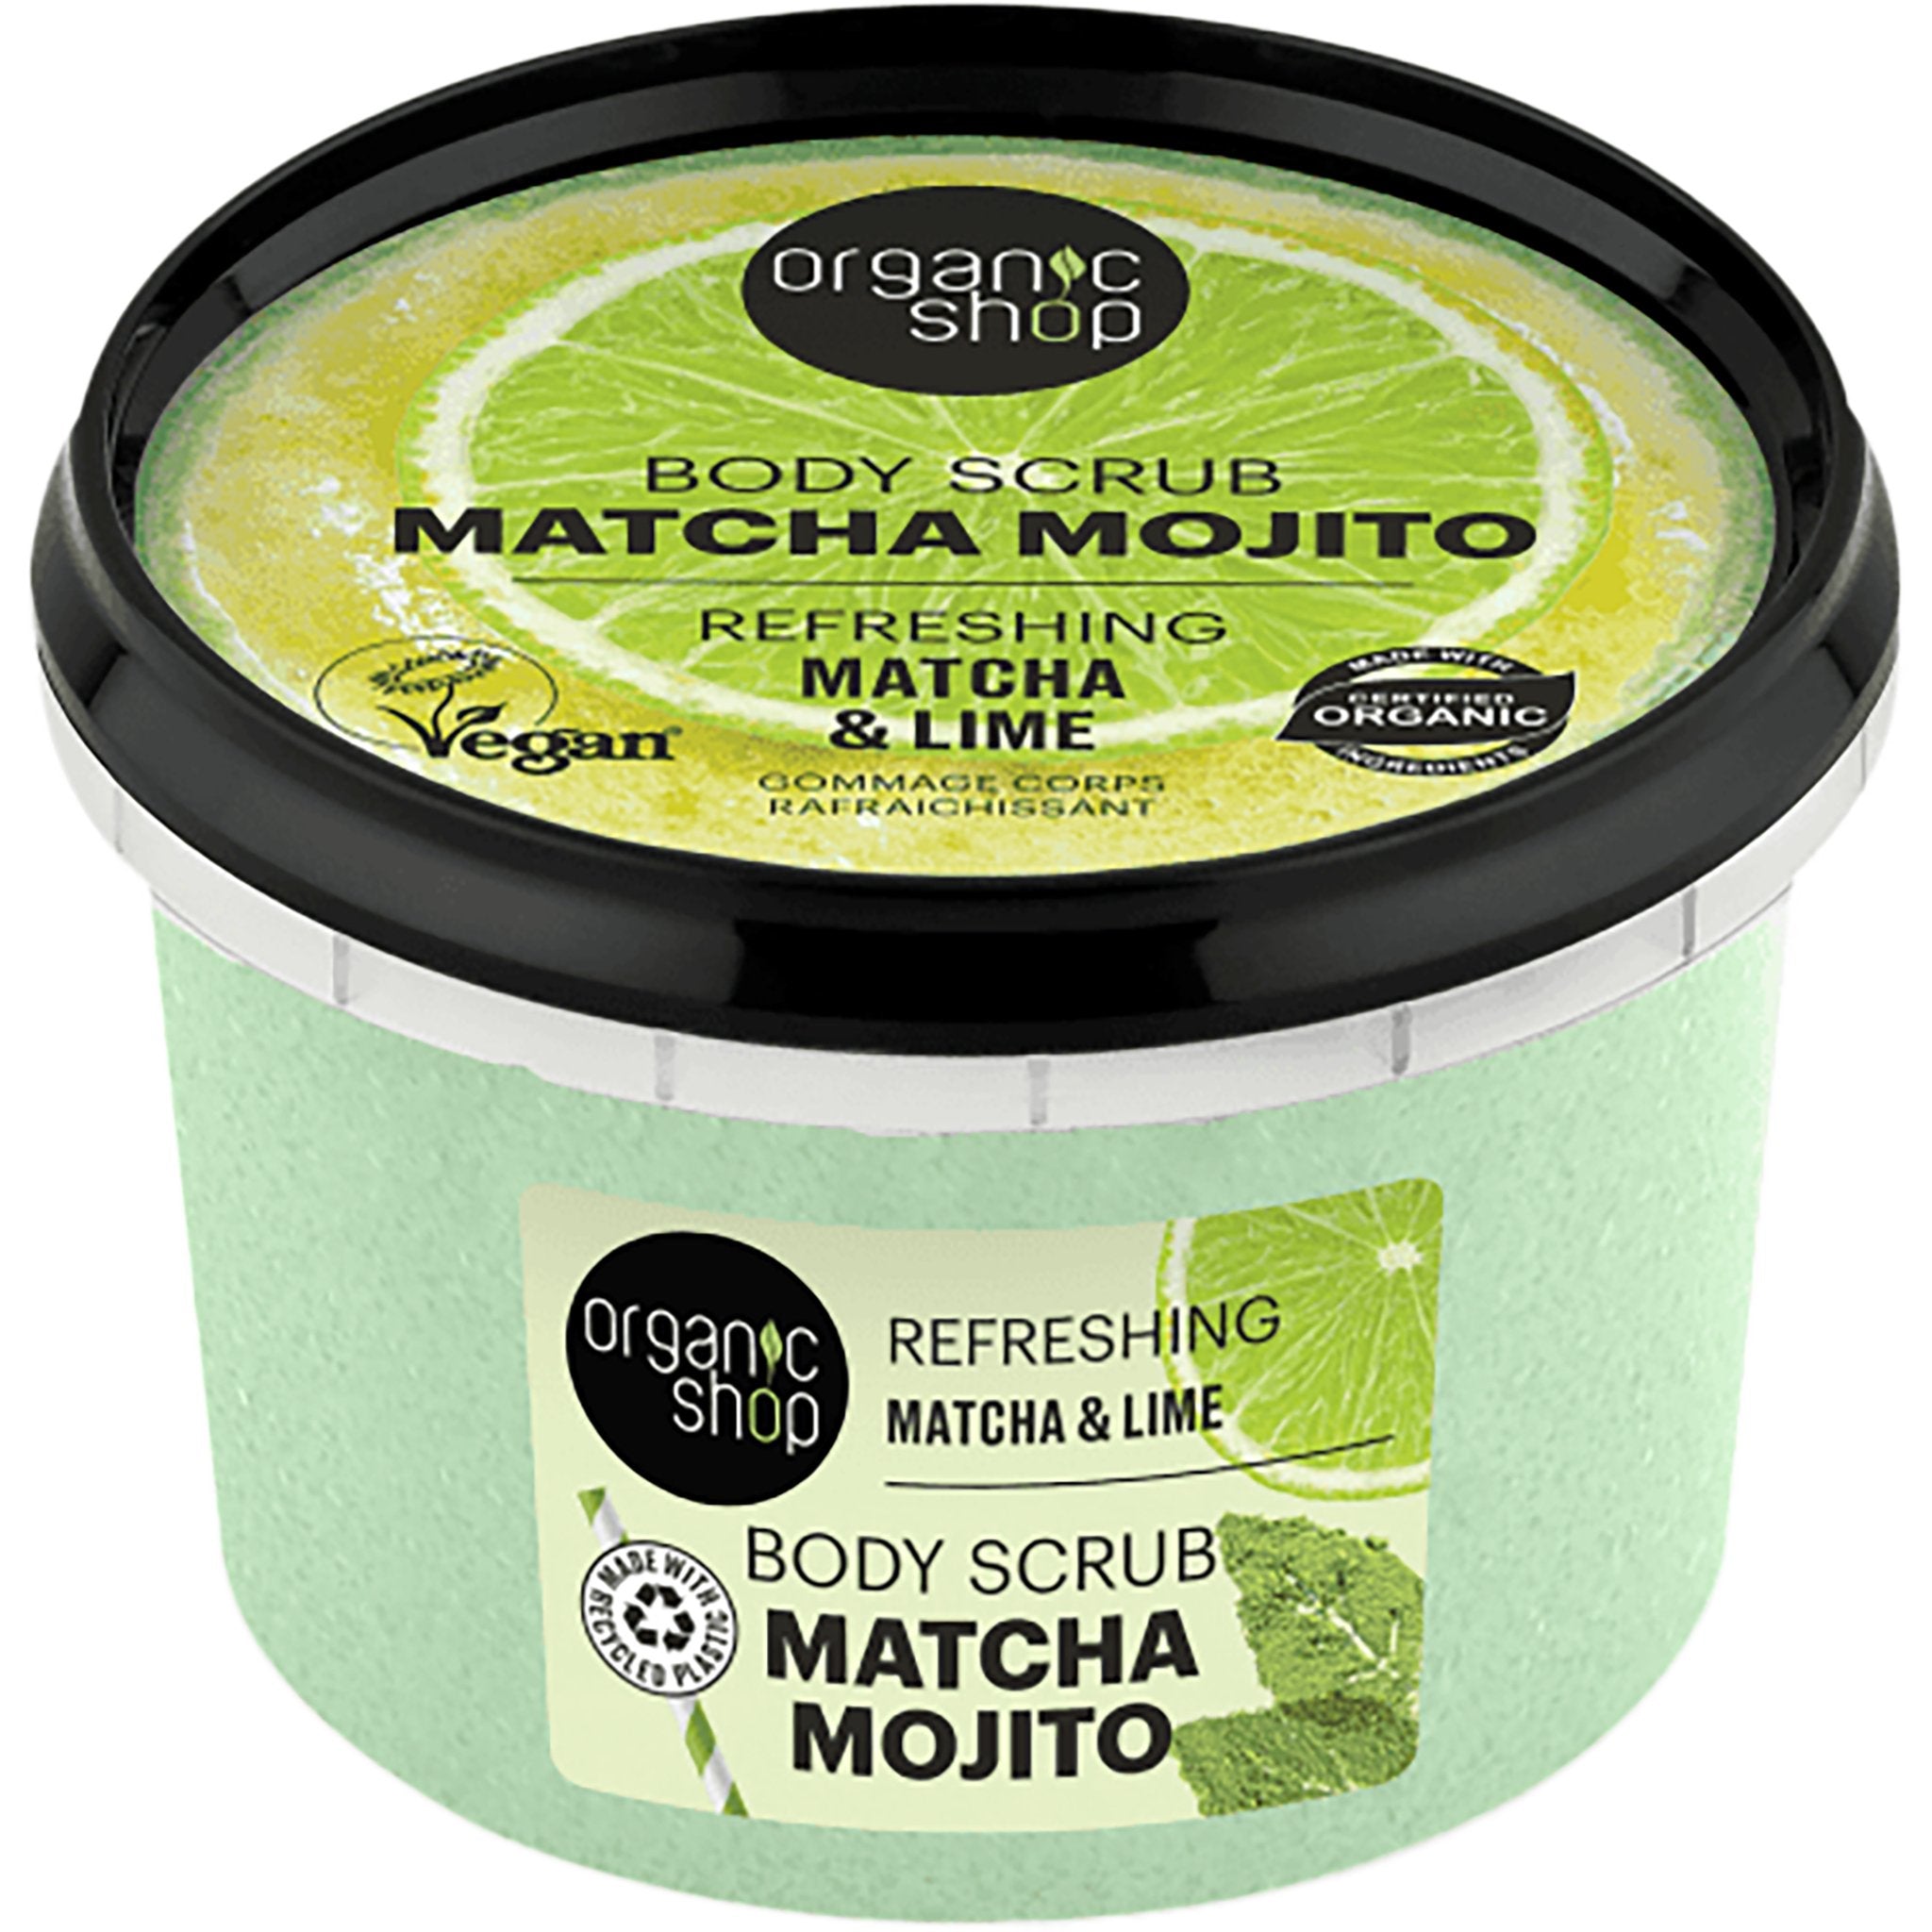 Refreshing Mojito Body Scrub Matcha & Lime - mypure.co.uk